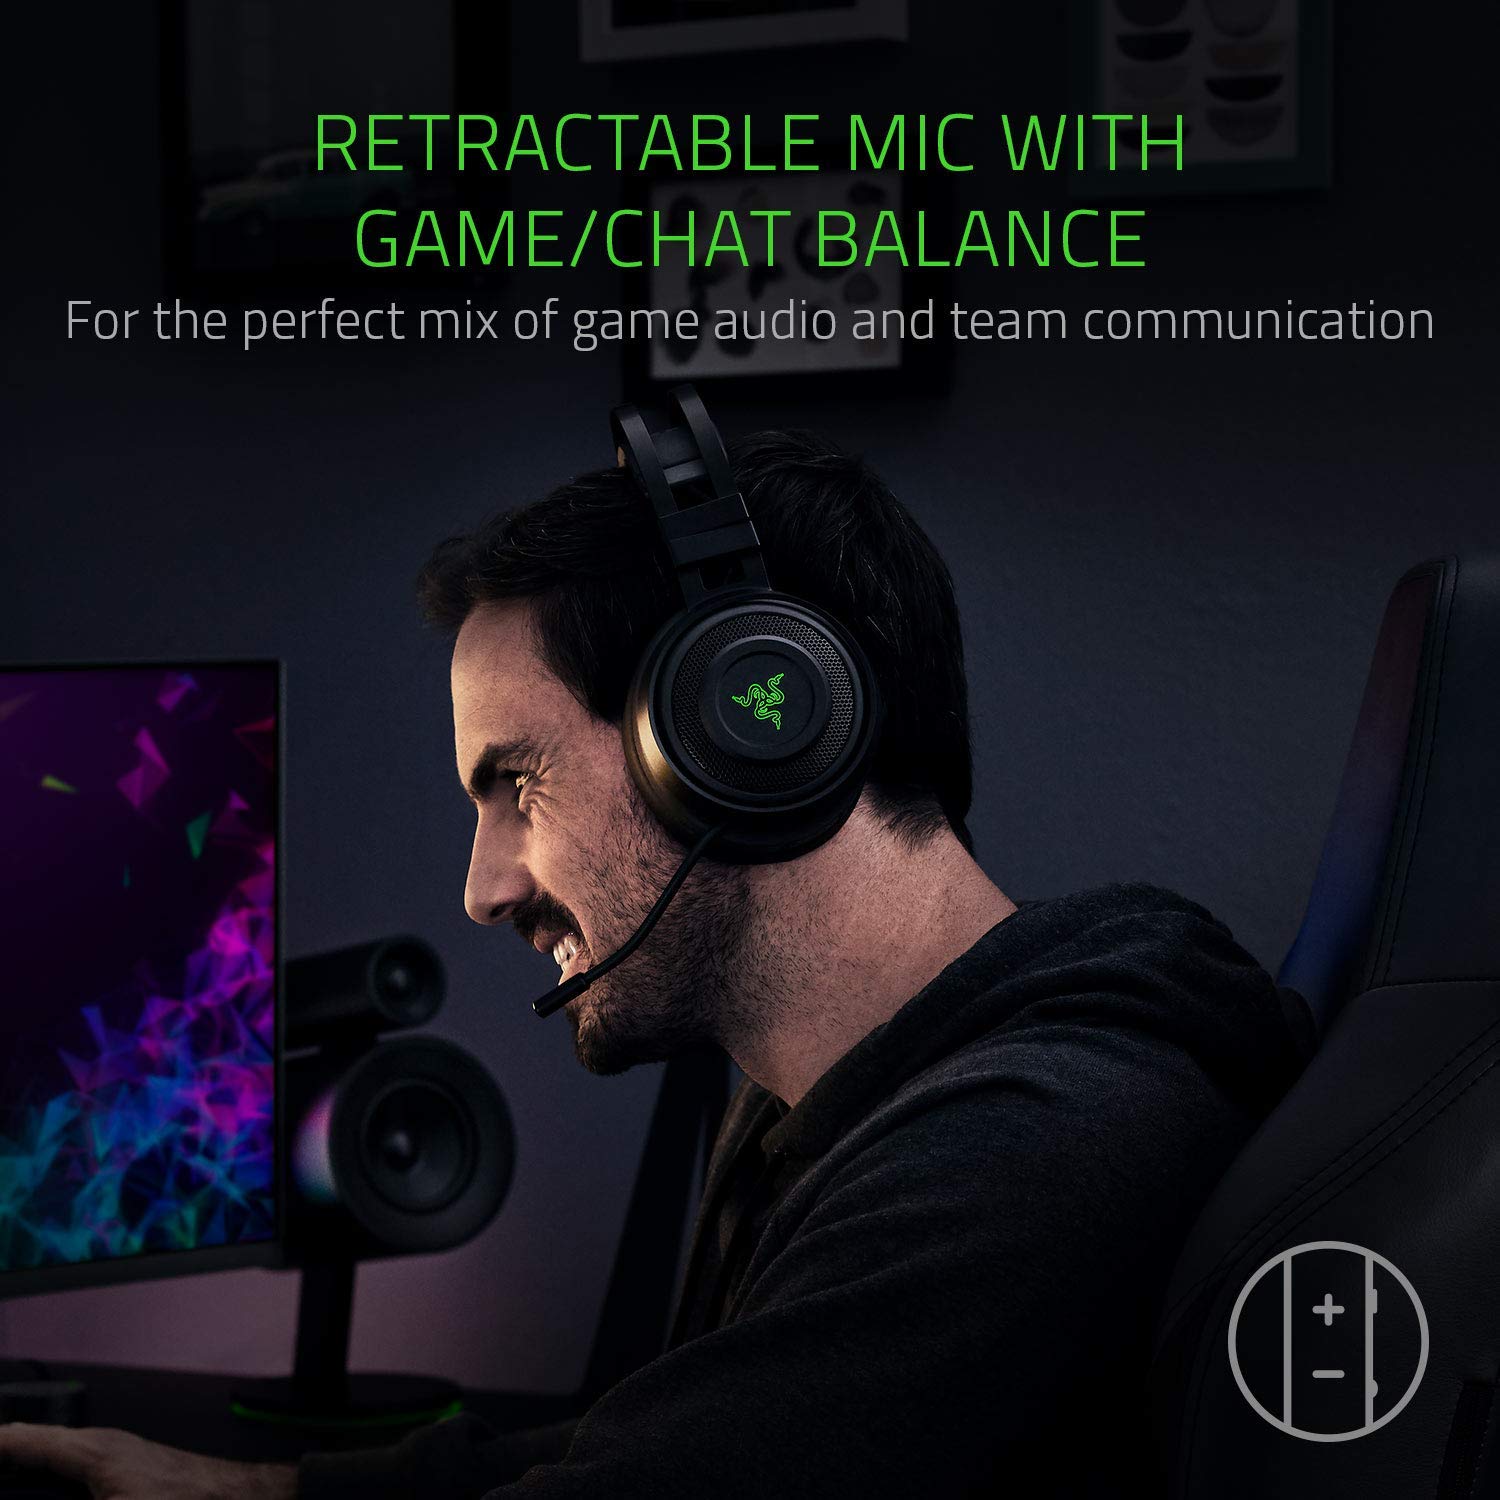 Razer Nari Wireless Gaming Headset ประกันศูนย์ 2ปี ของแท้ หูฟังสำหรับเล่นเกม